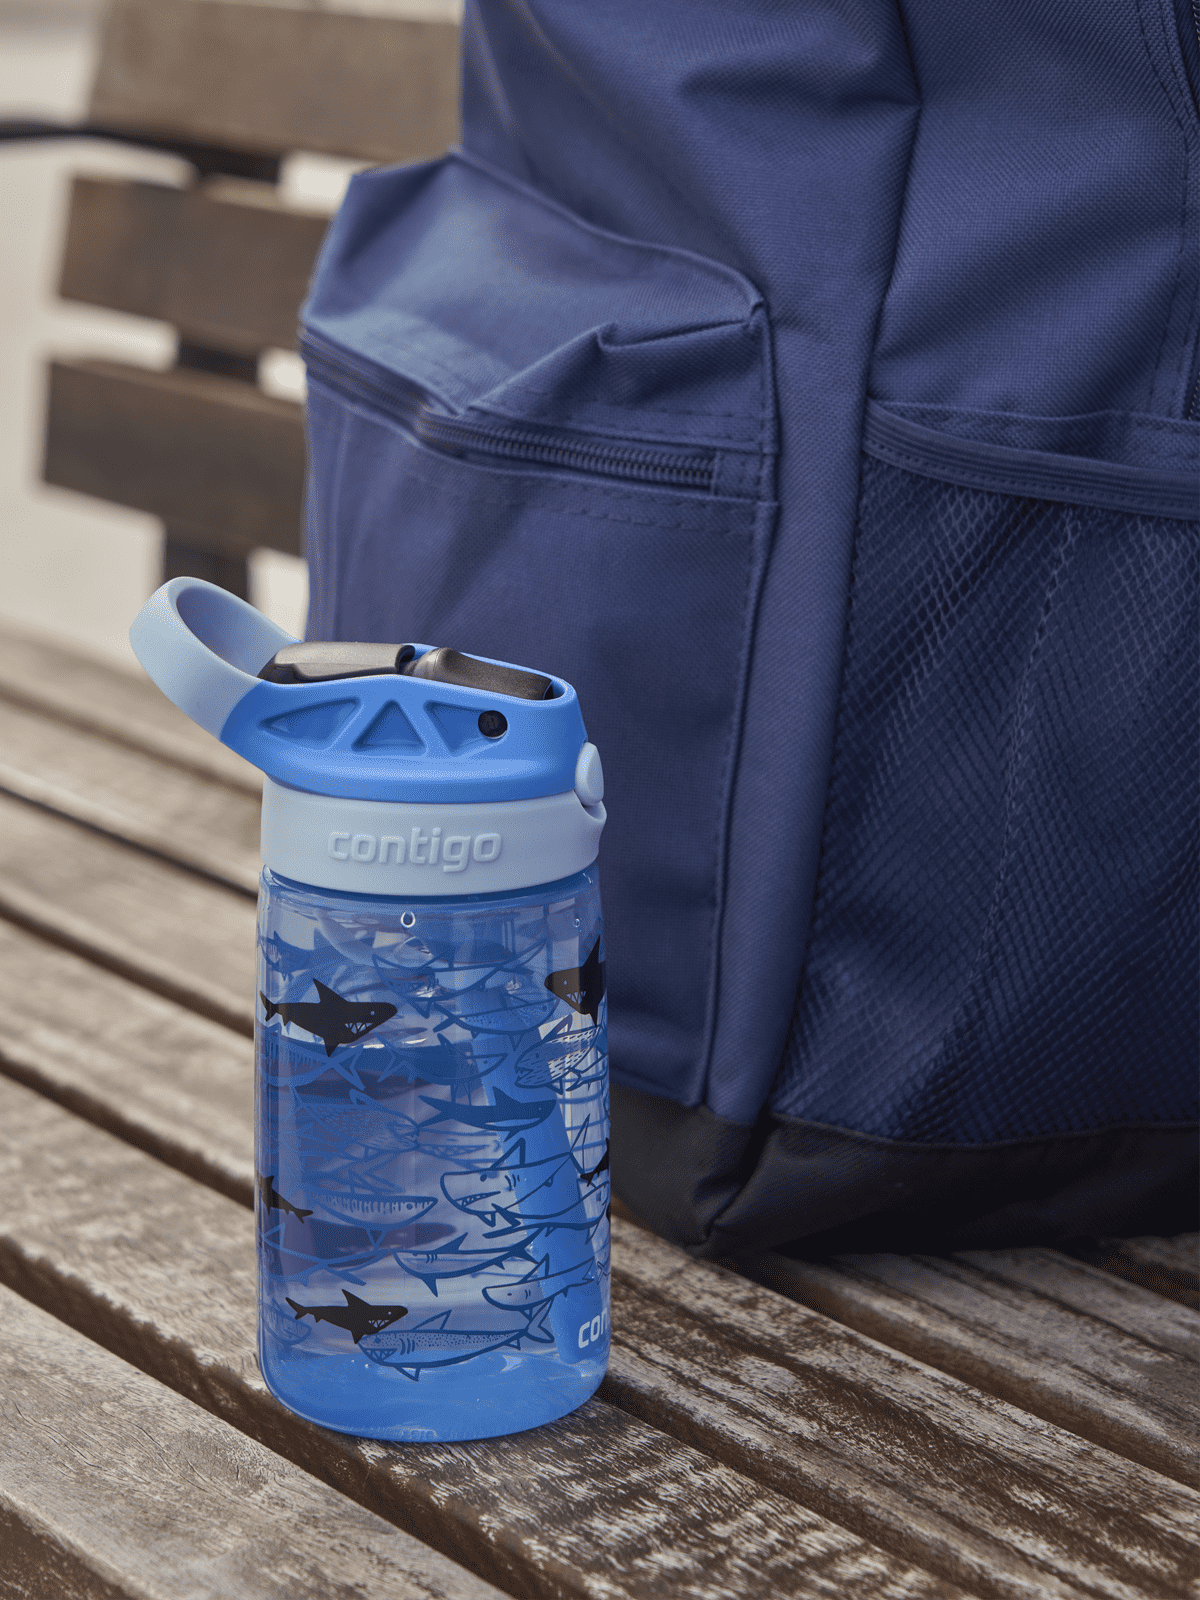 Contigo Easy Clean AUTOSPOUT™ Kids Water Bottle, 420 ml (mermaids)